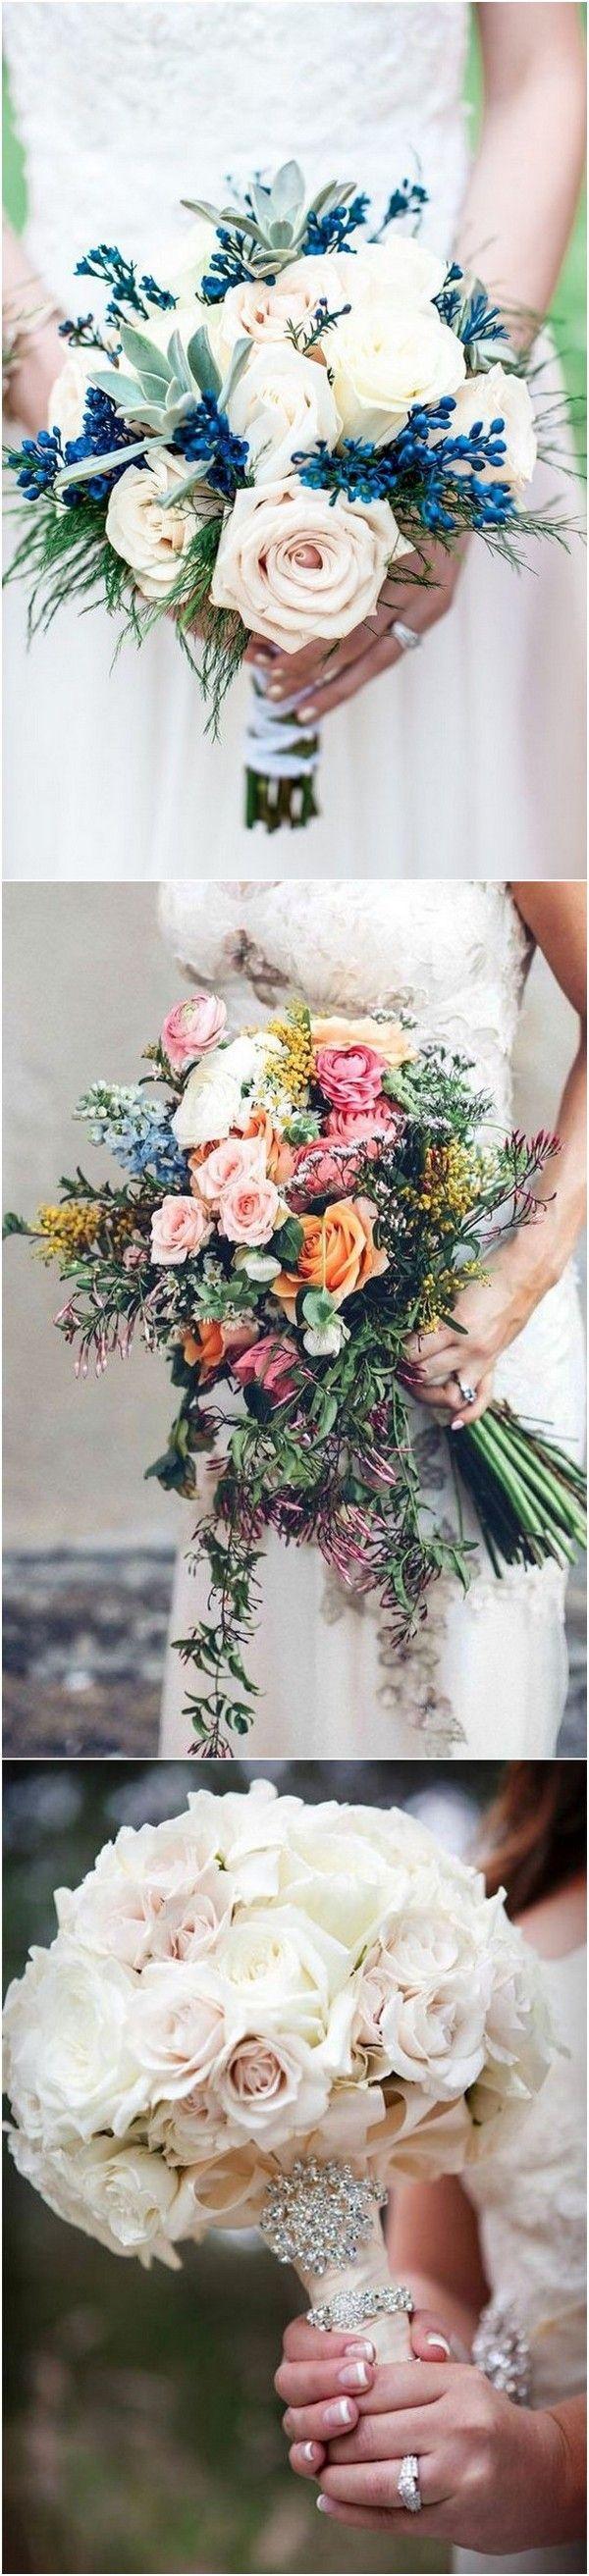 Wedding - 15 Stunning Wedding Bouquets For 2018